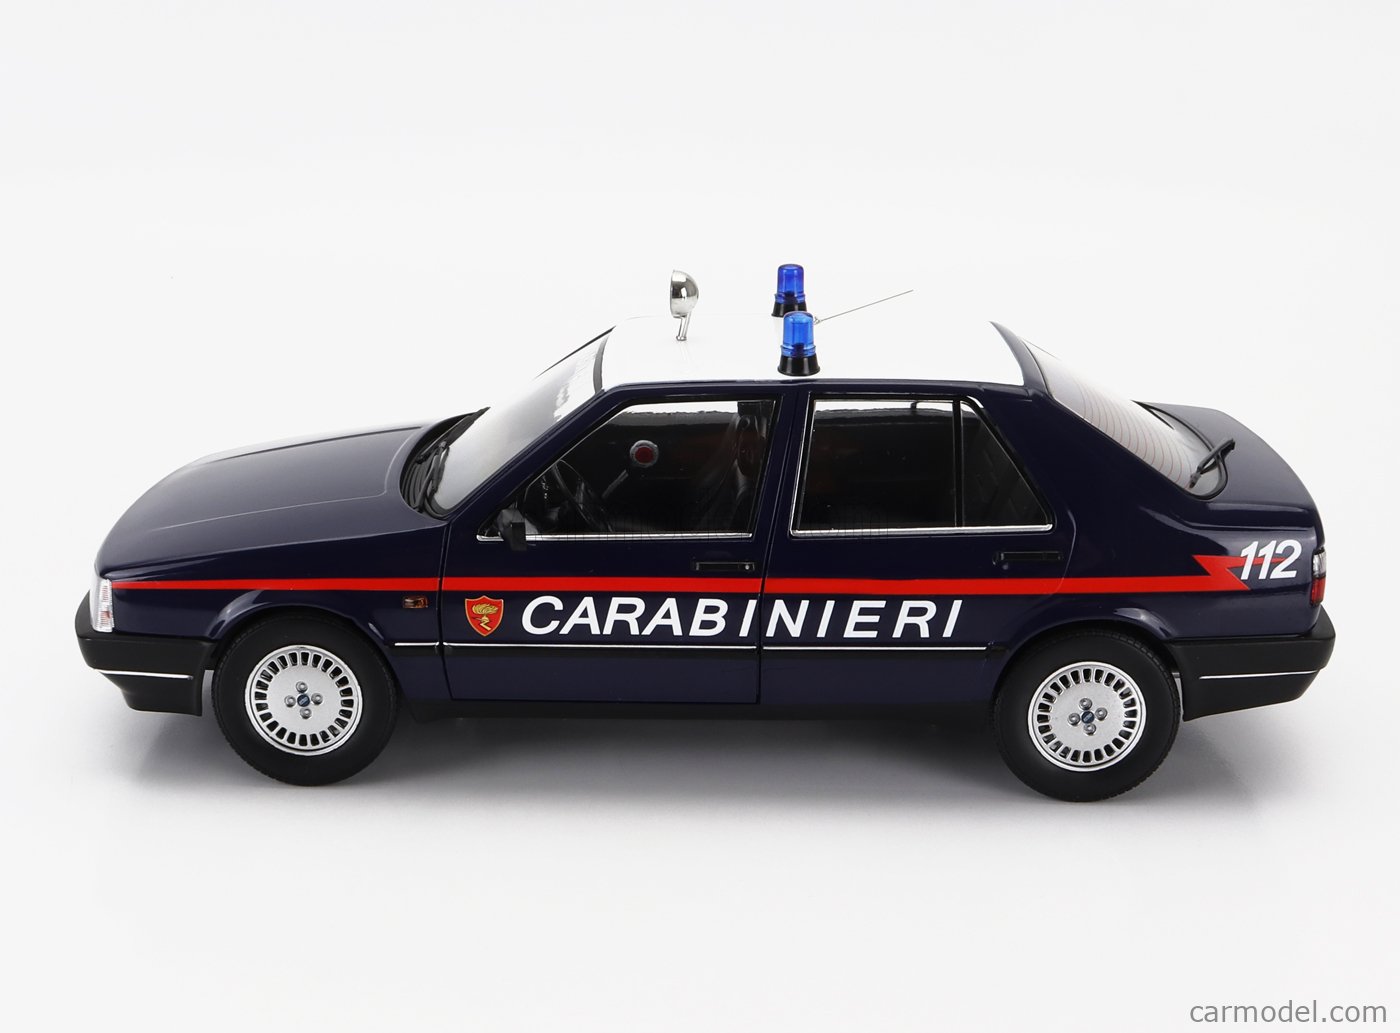 FIAT - CROMA 2.0 TURBO IE CARABINIERI 1988 POLICE